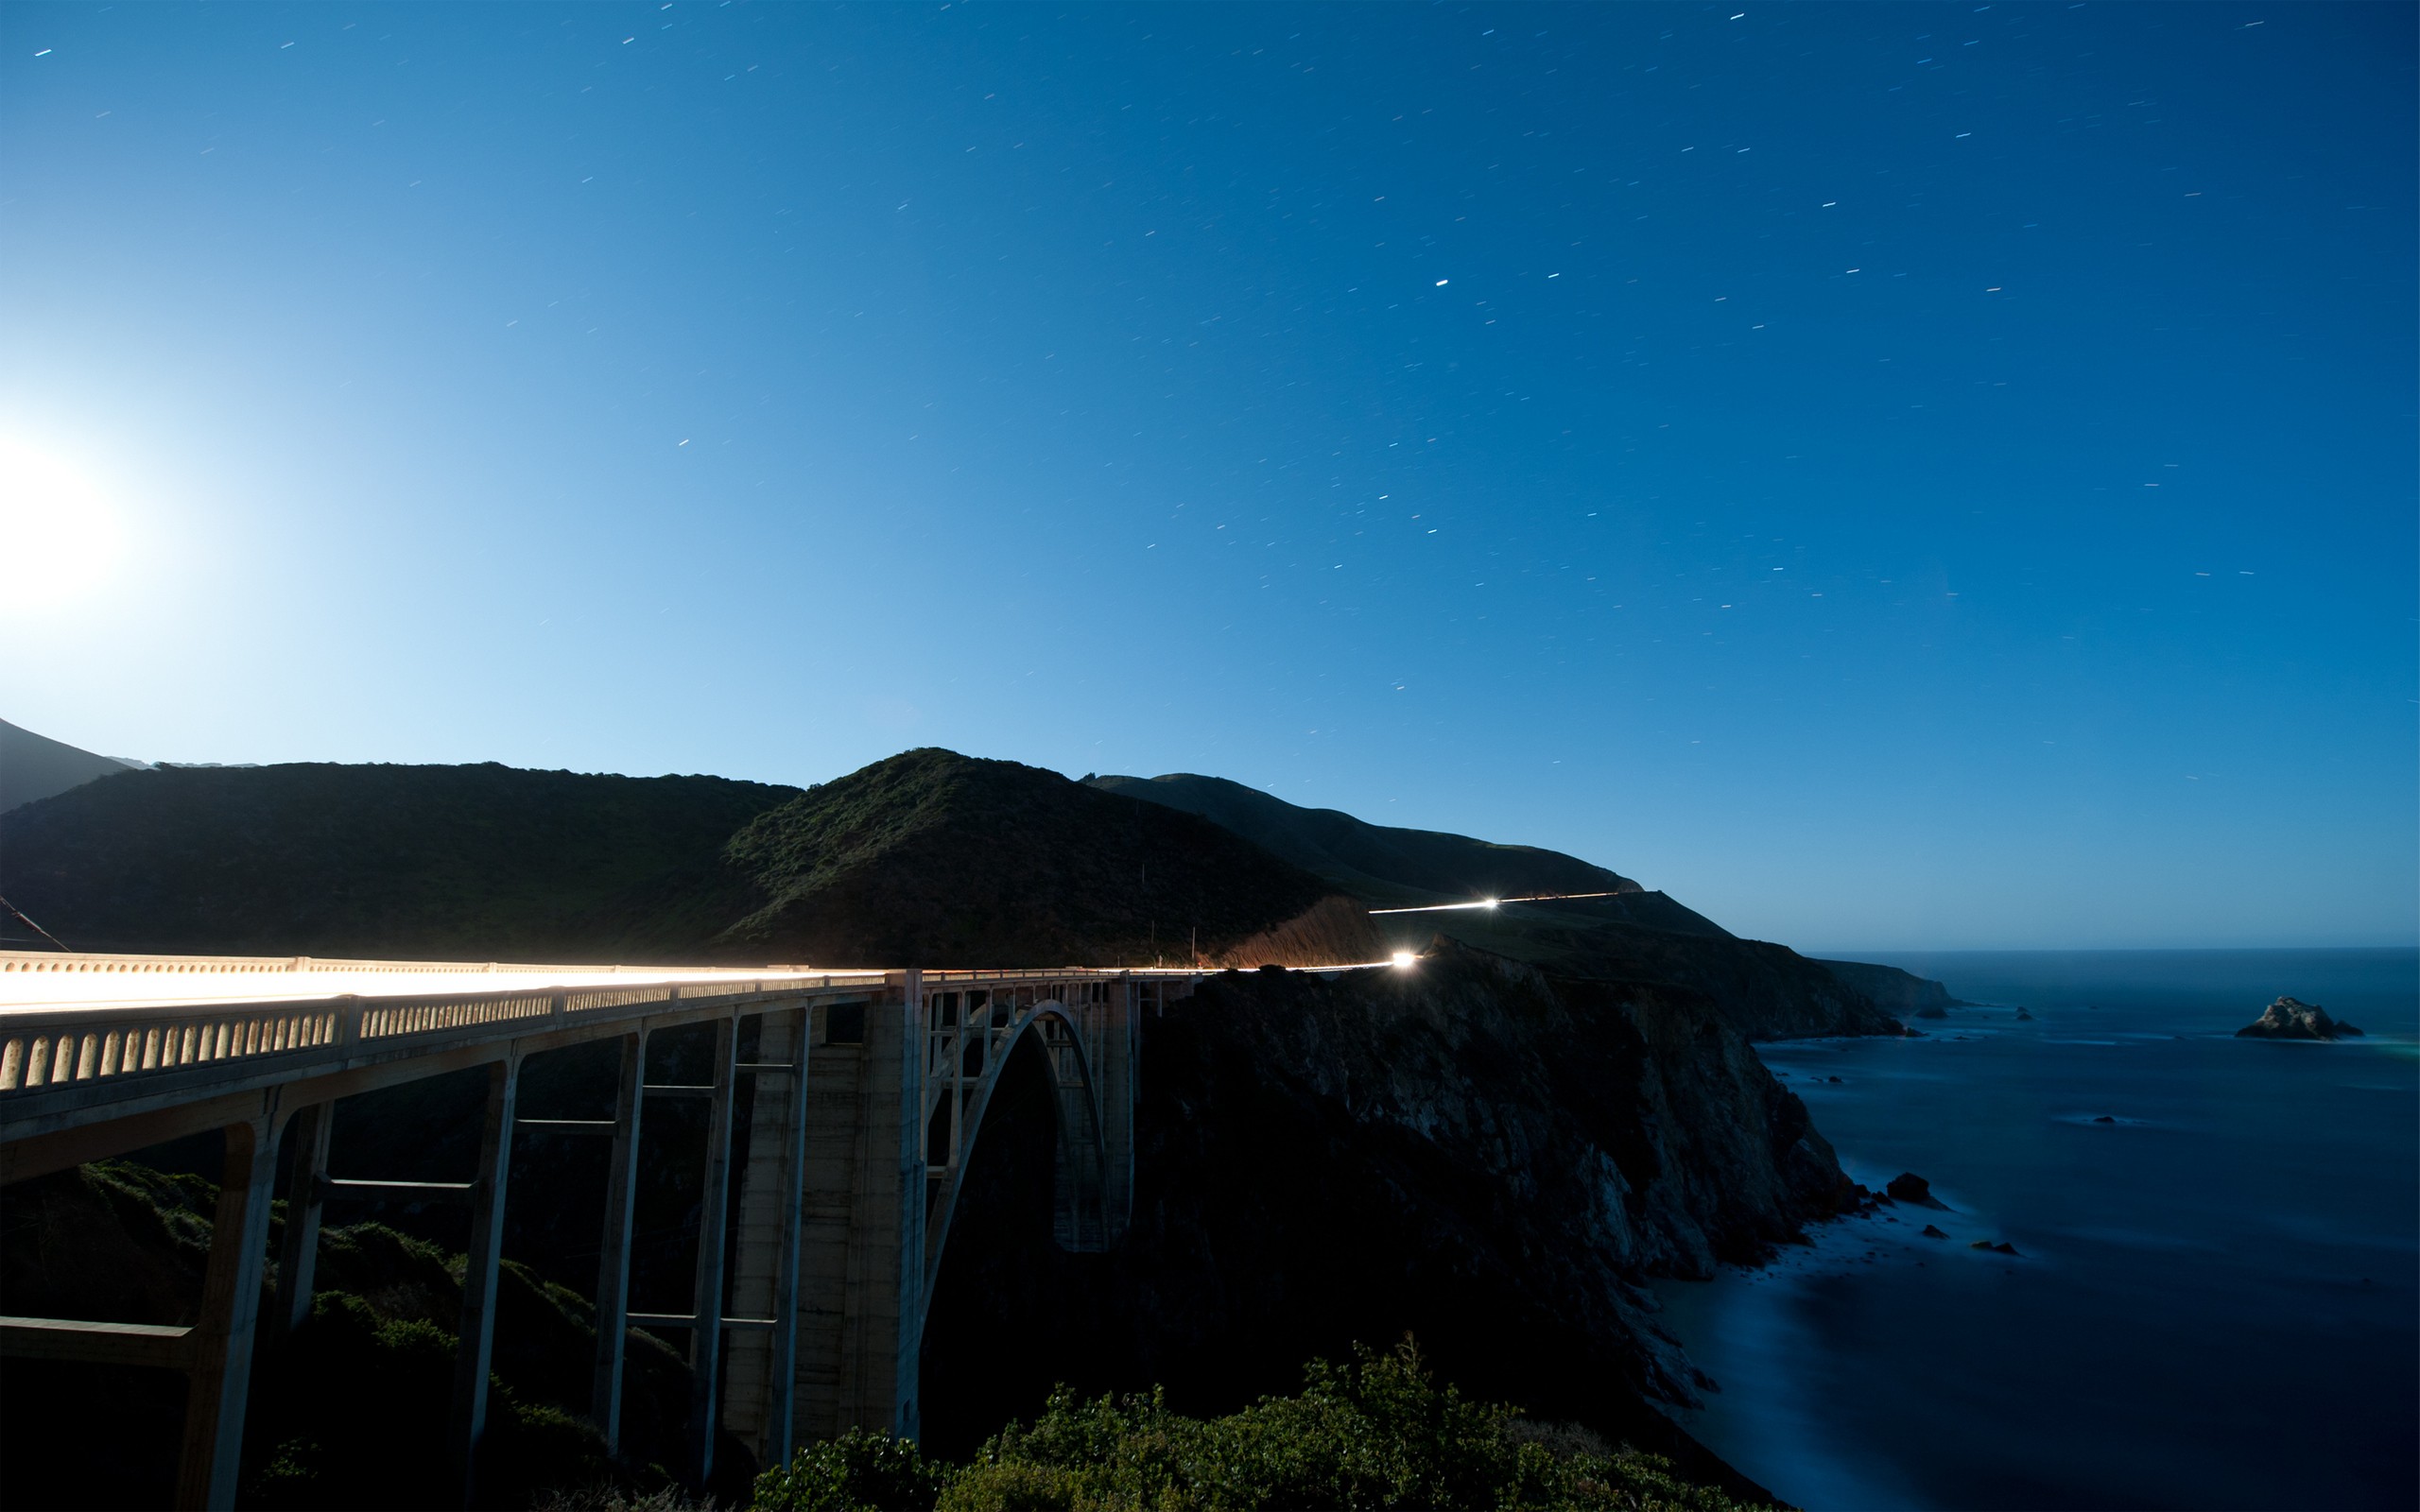 General 2560x1600 landscape bridge viaduct shore road Bixby Creek Bridge USA California night long exposure low light